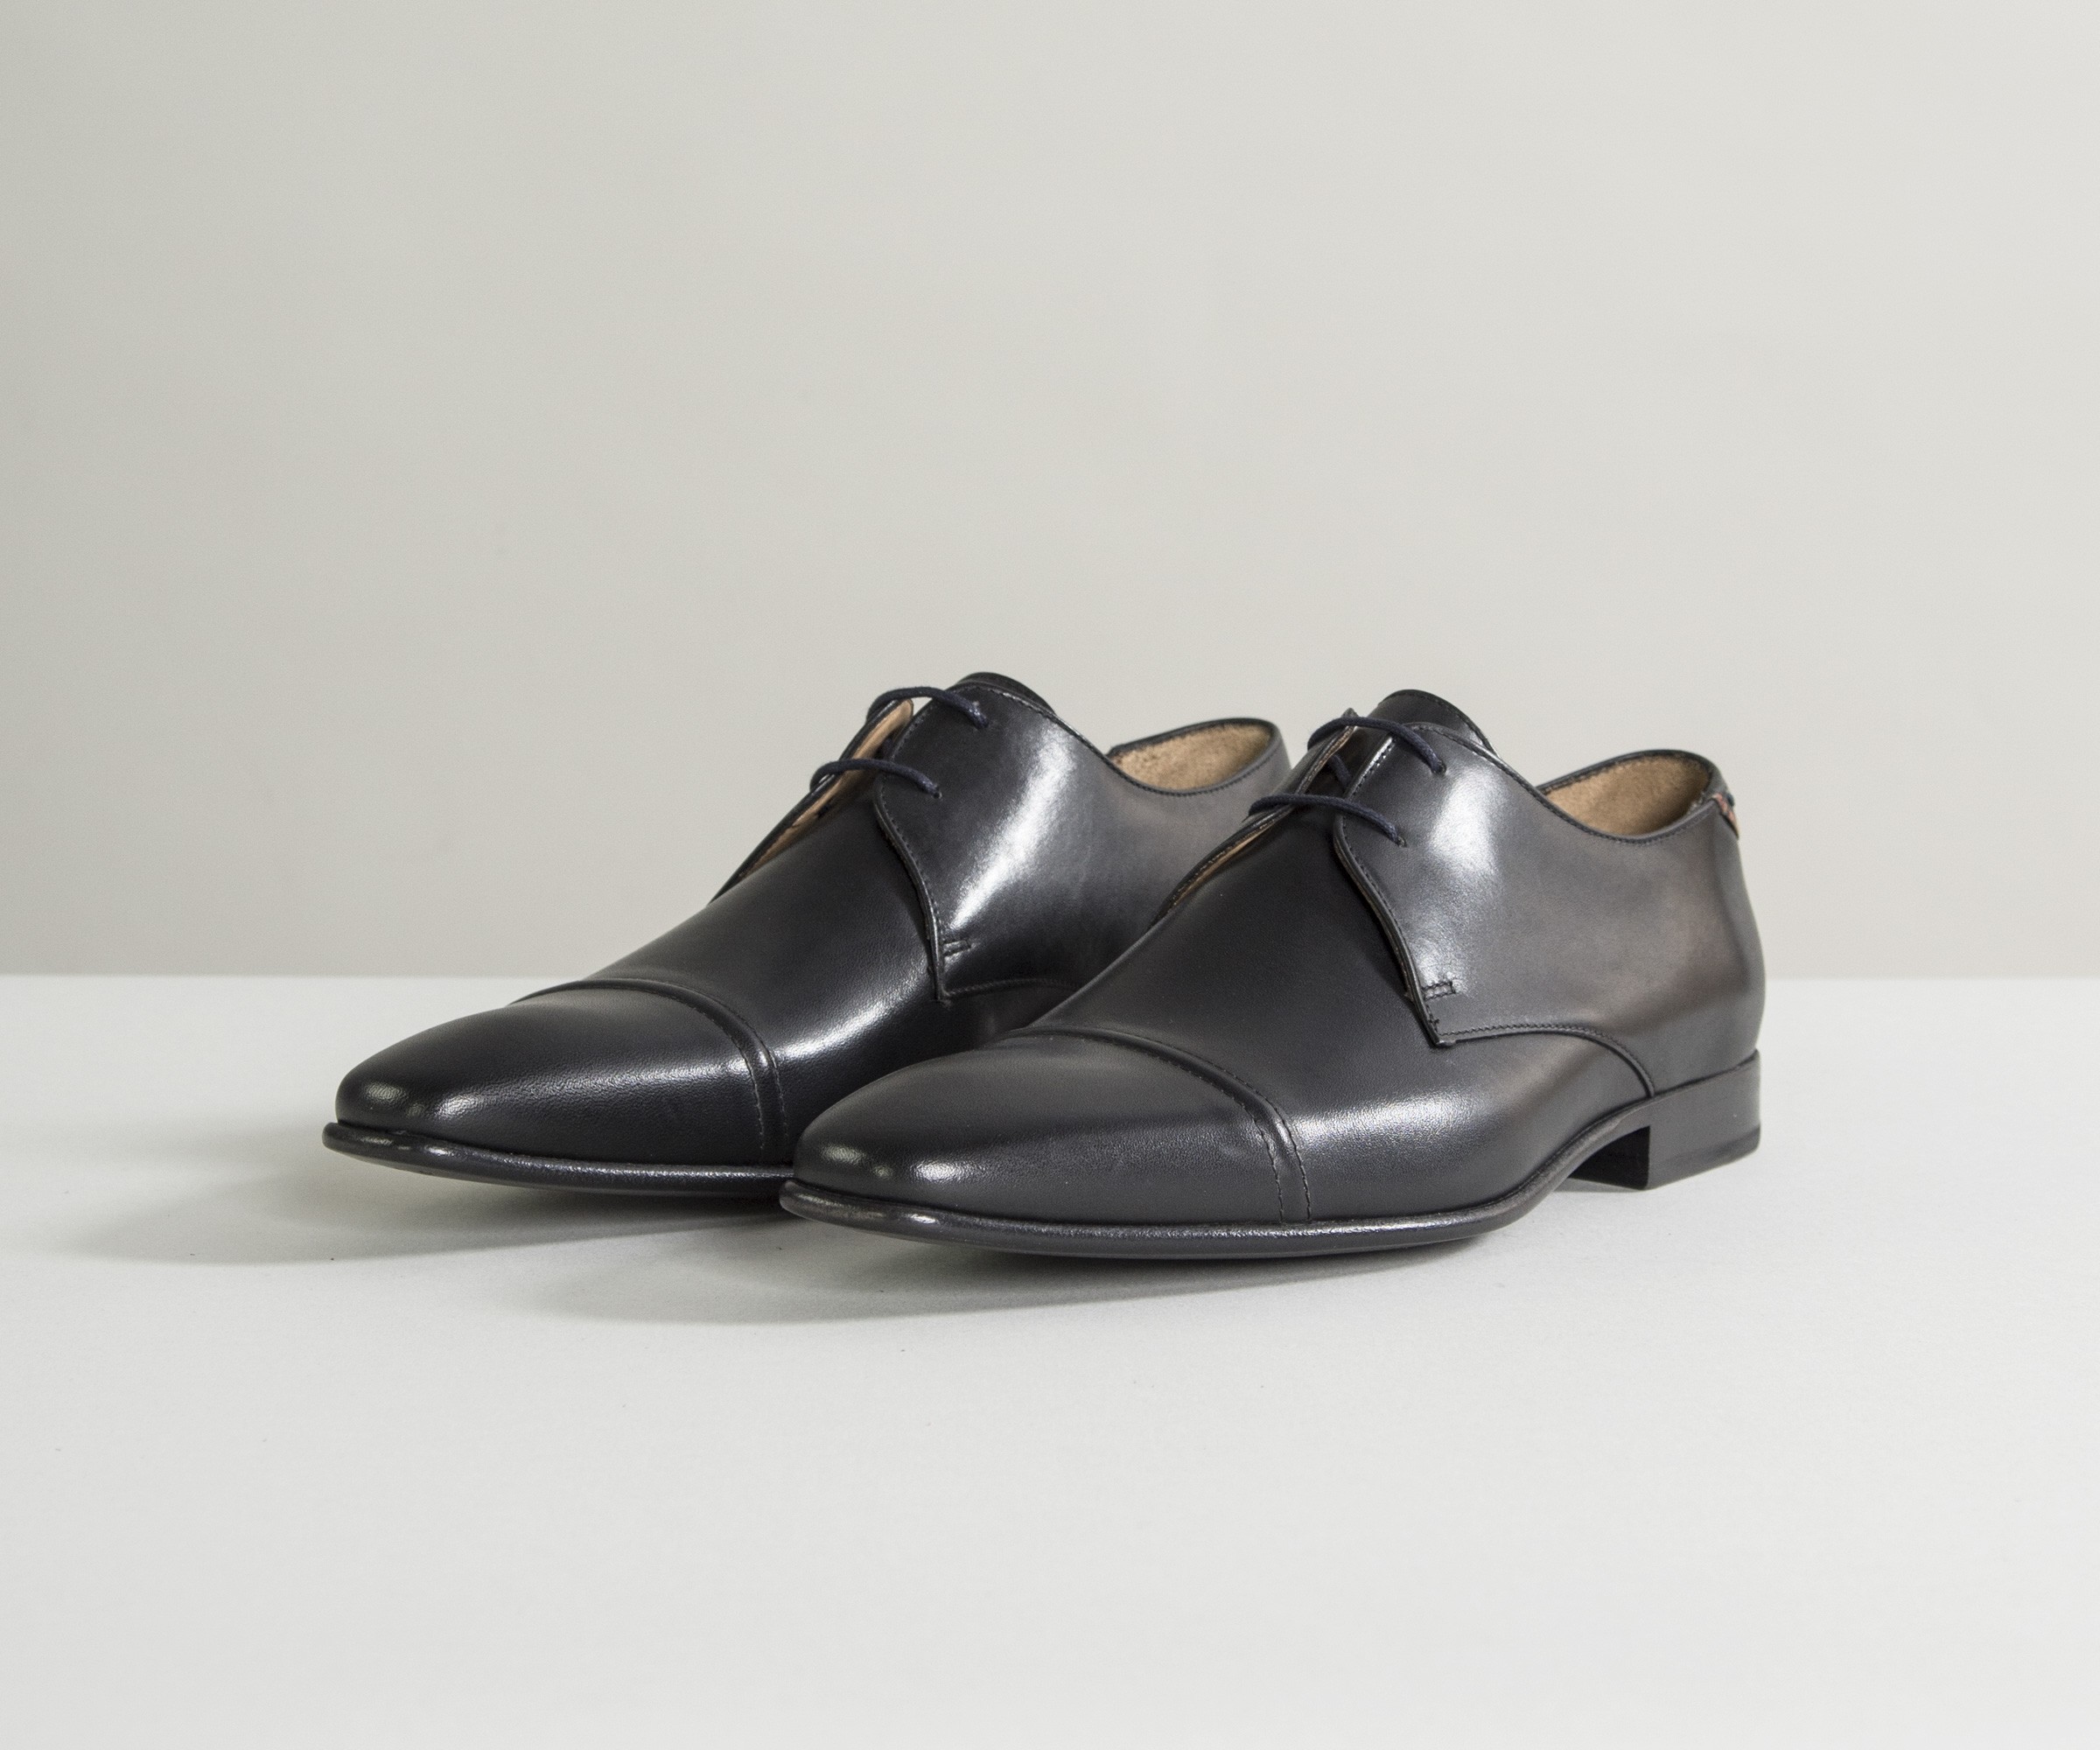 Paul Smith Shoes 'Robin' Formal Shoe Black